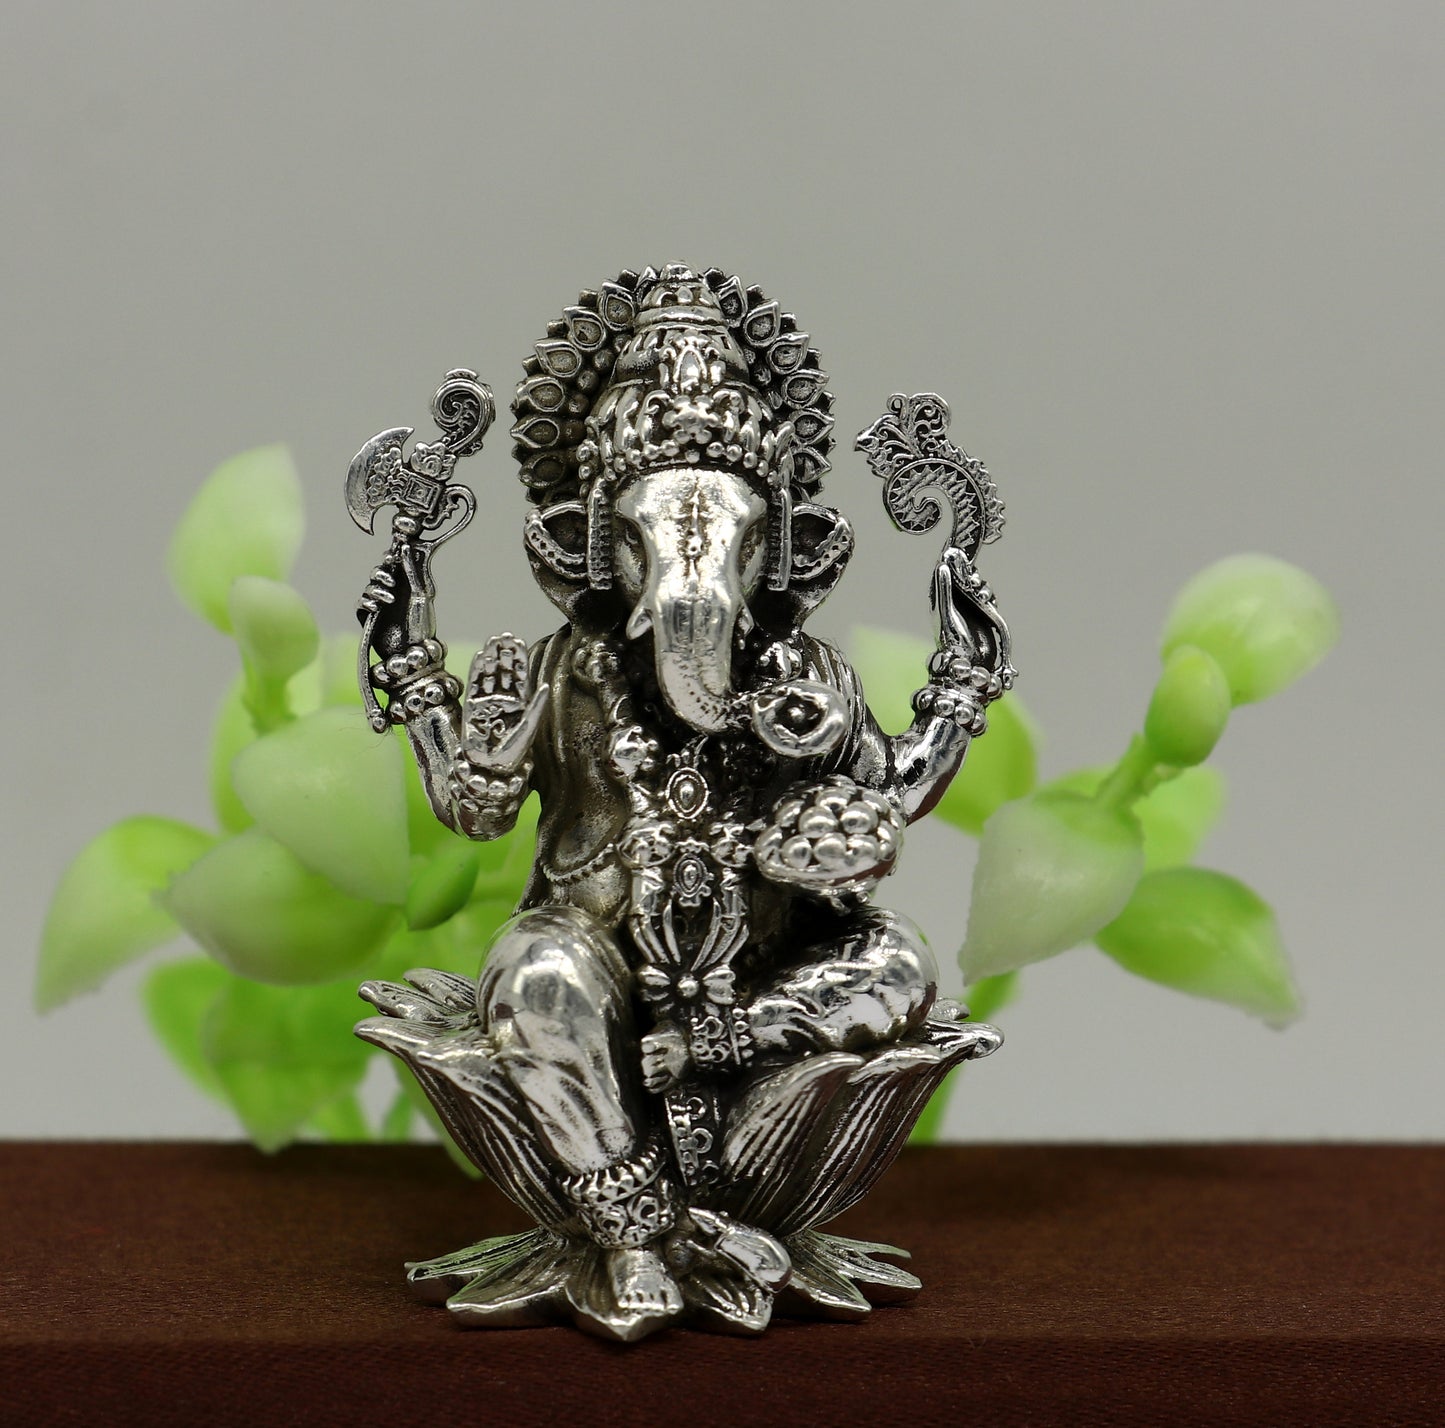 2" small 925 Sterling silver handmade customized Hindu God Idol Ganesha statue, puja article figurine, home decor utensils art31 - TRIBAL ORNAMENTS